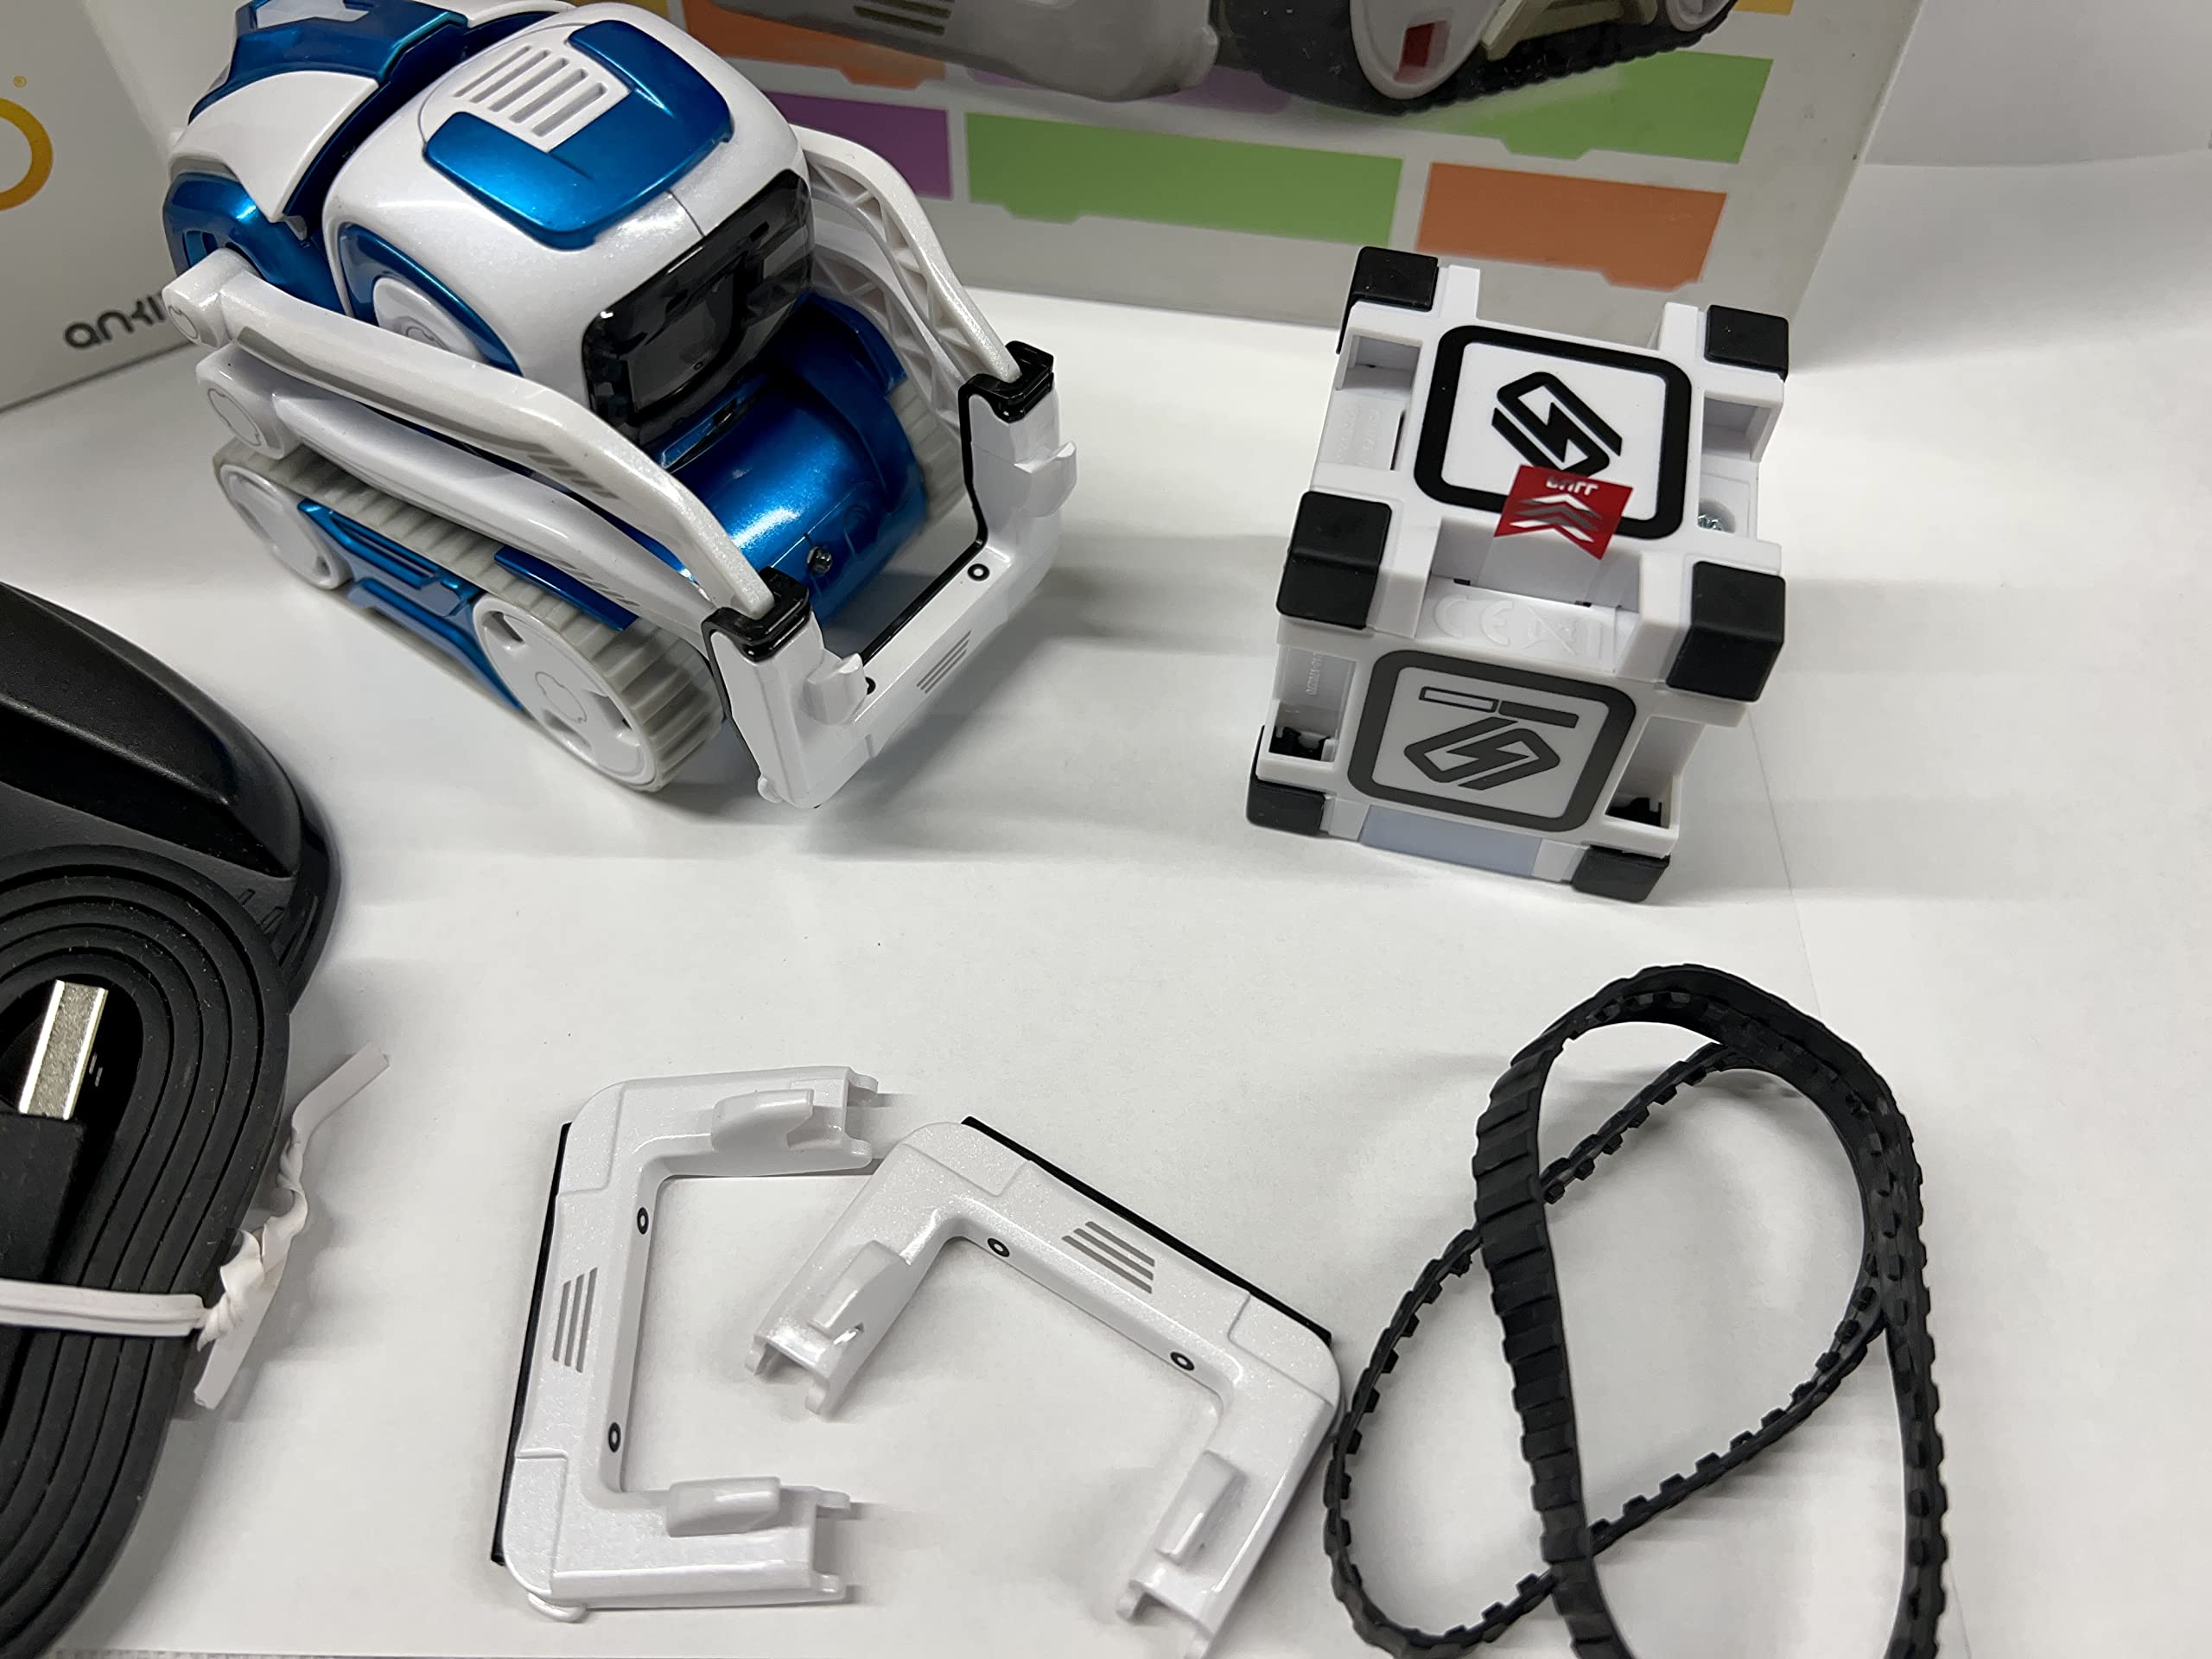 Mua Cozmo Toy Robot for Kids - Mega Bundle w/Limited Edition Interstellar  Blue Robot, Charger, Coding Book, One Block, Spare Treads, New! No Retail  Box! trên Amazon Mỹ chính hãng 2023 | Giaonhan247